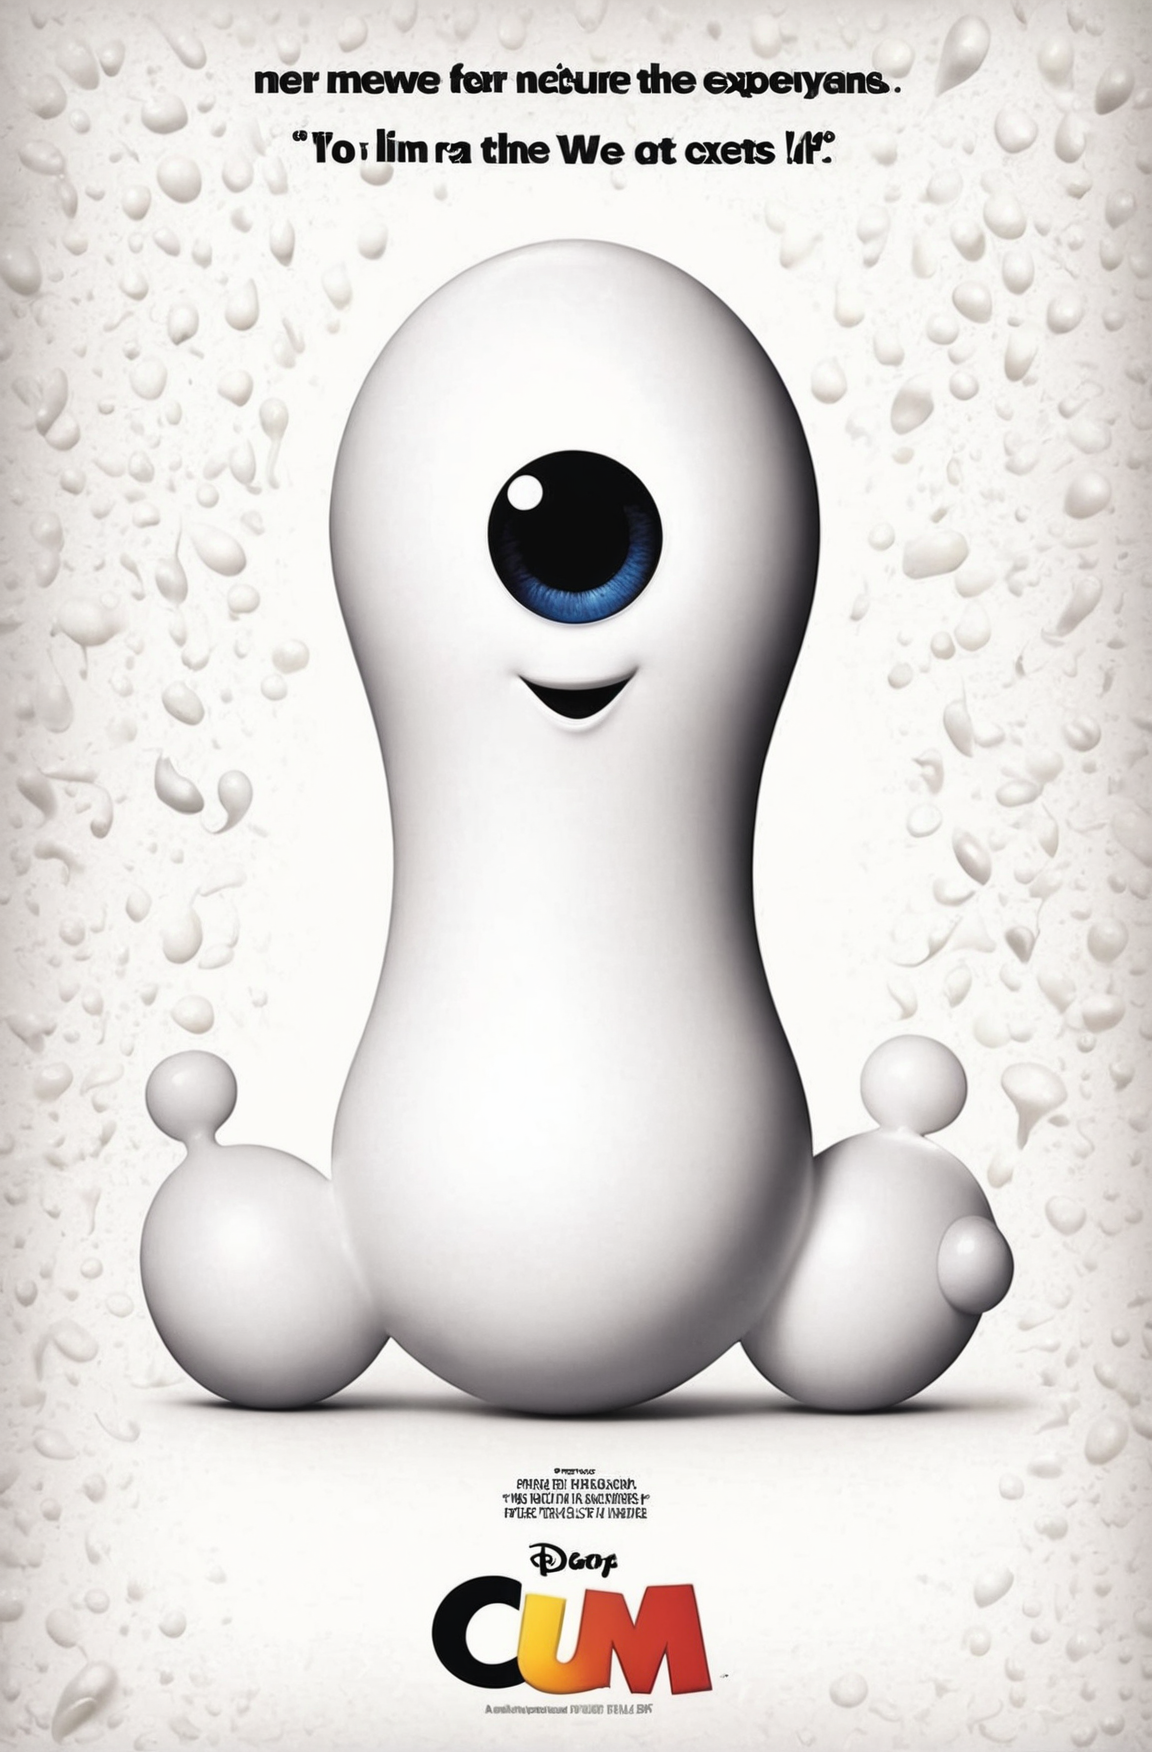 Movie Poster of a Rated-R Pixar Movie called "CUM", Pixar Animation, Sperm Figure